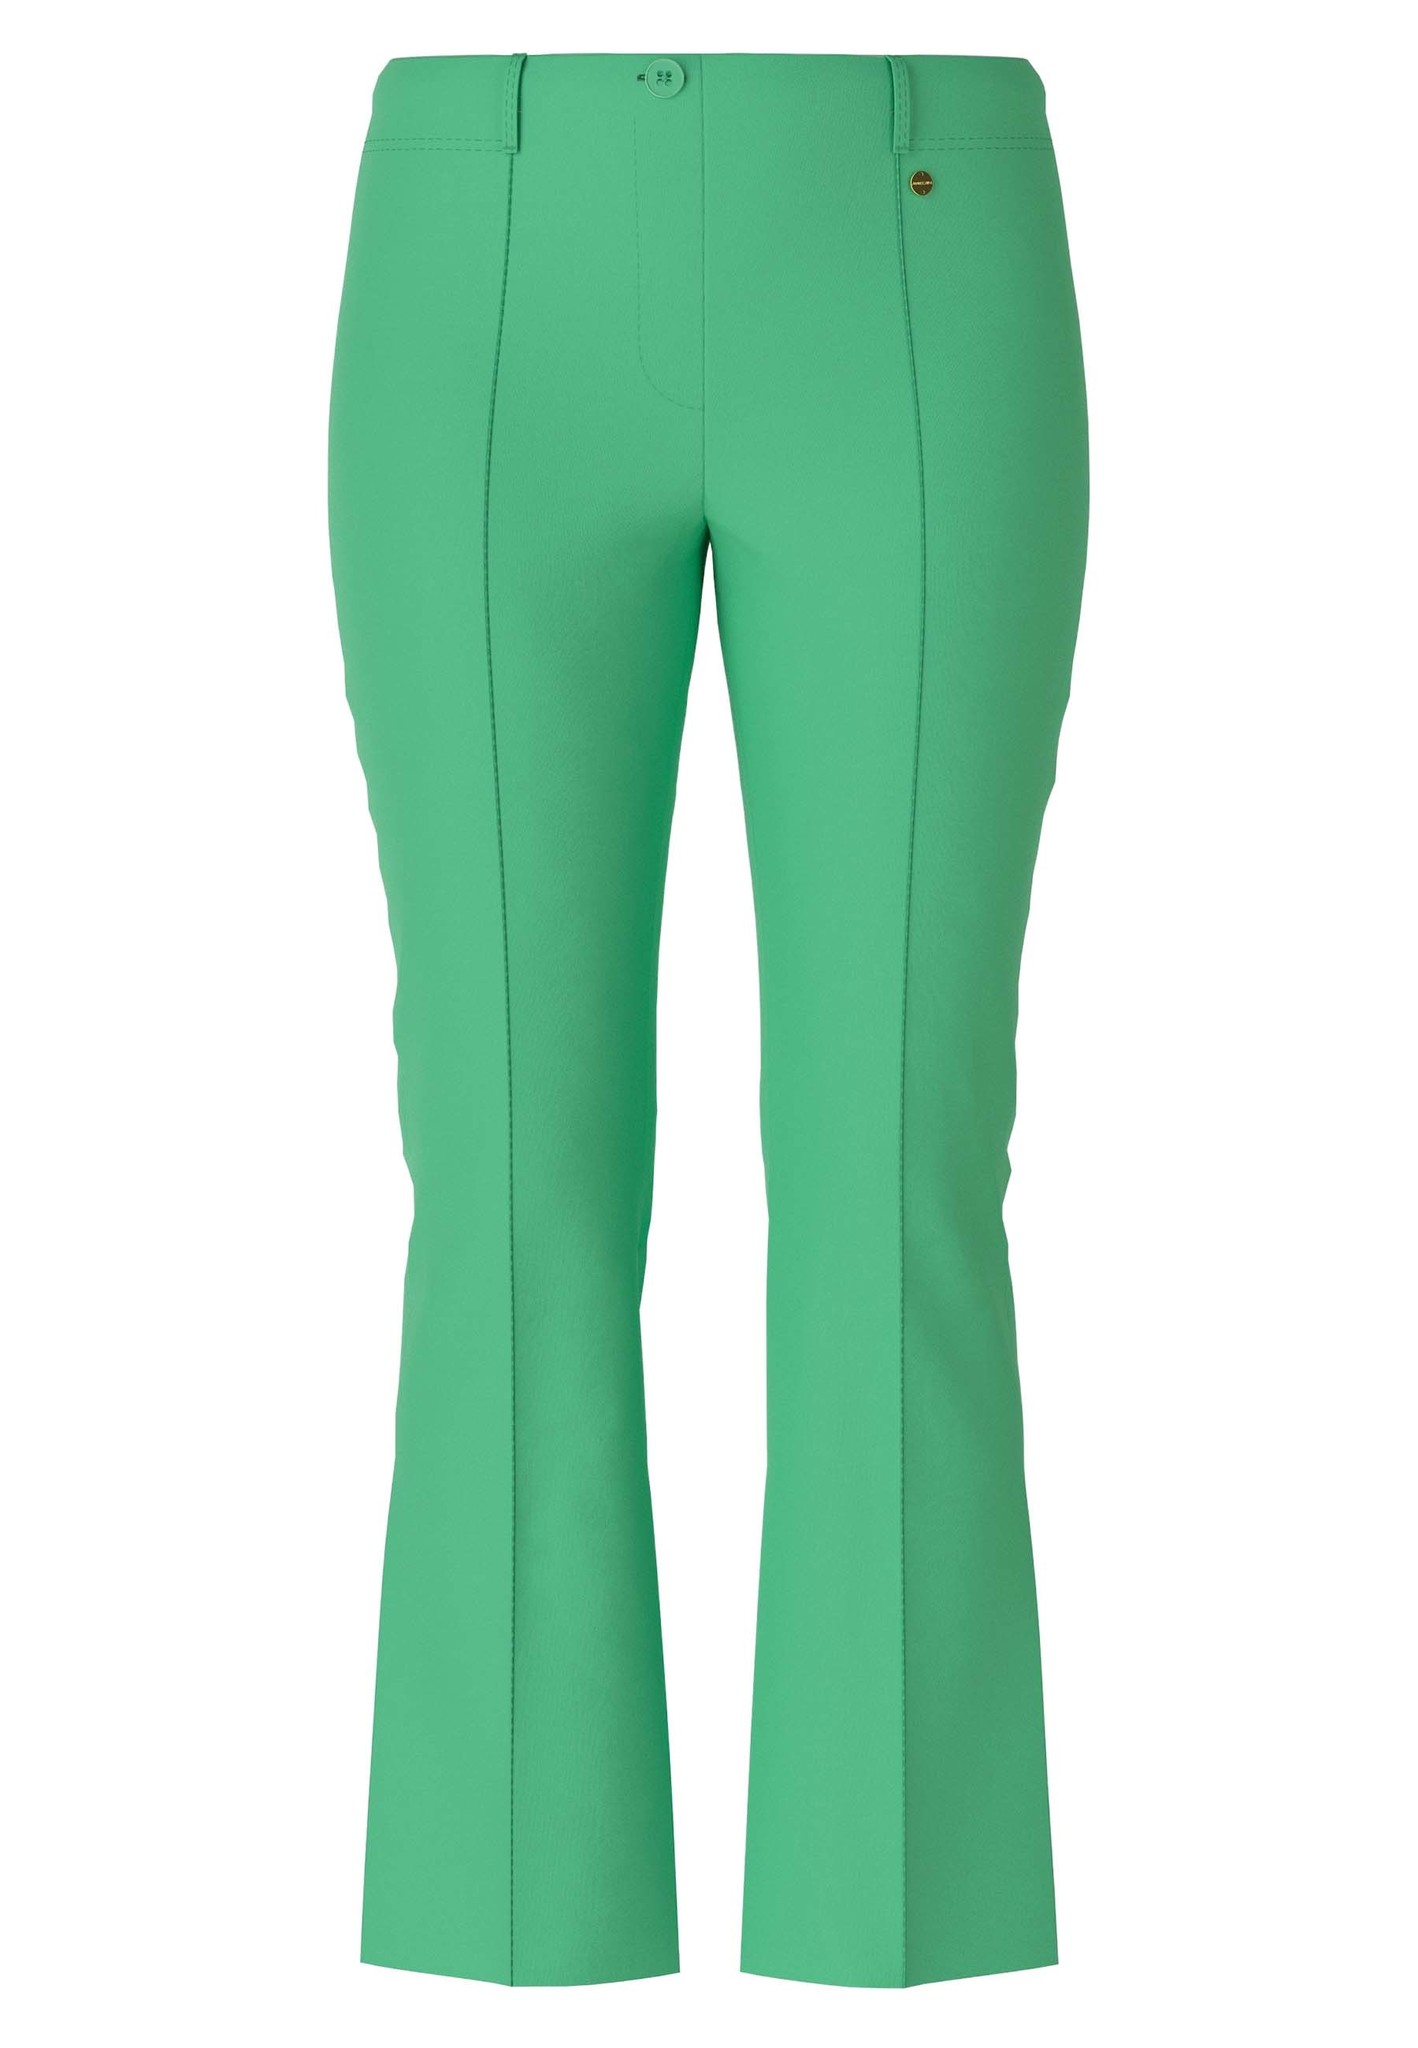 Marccain Broek Groen Polyester maat 44 pantalons groen